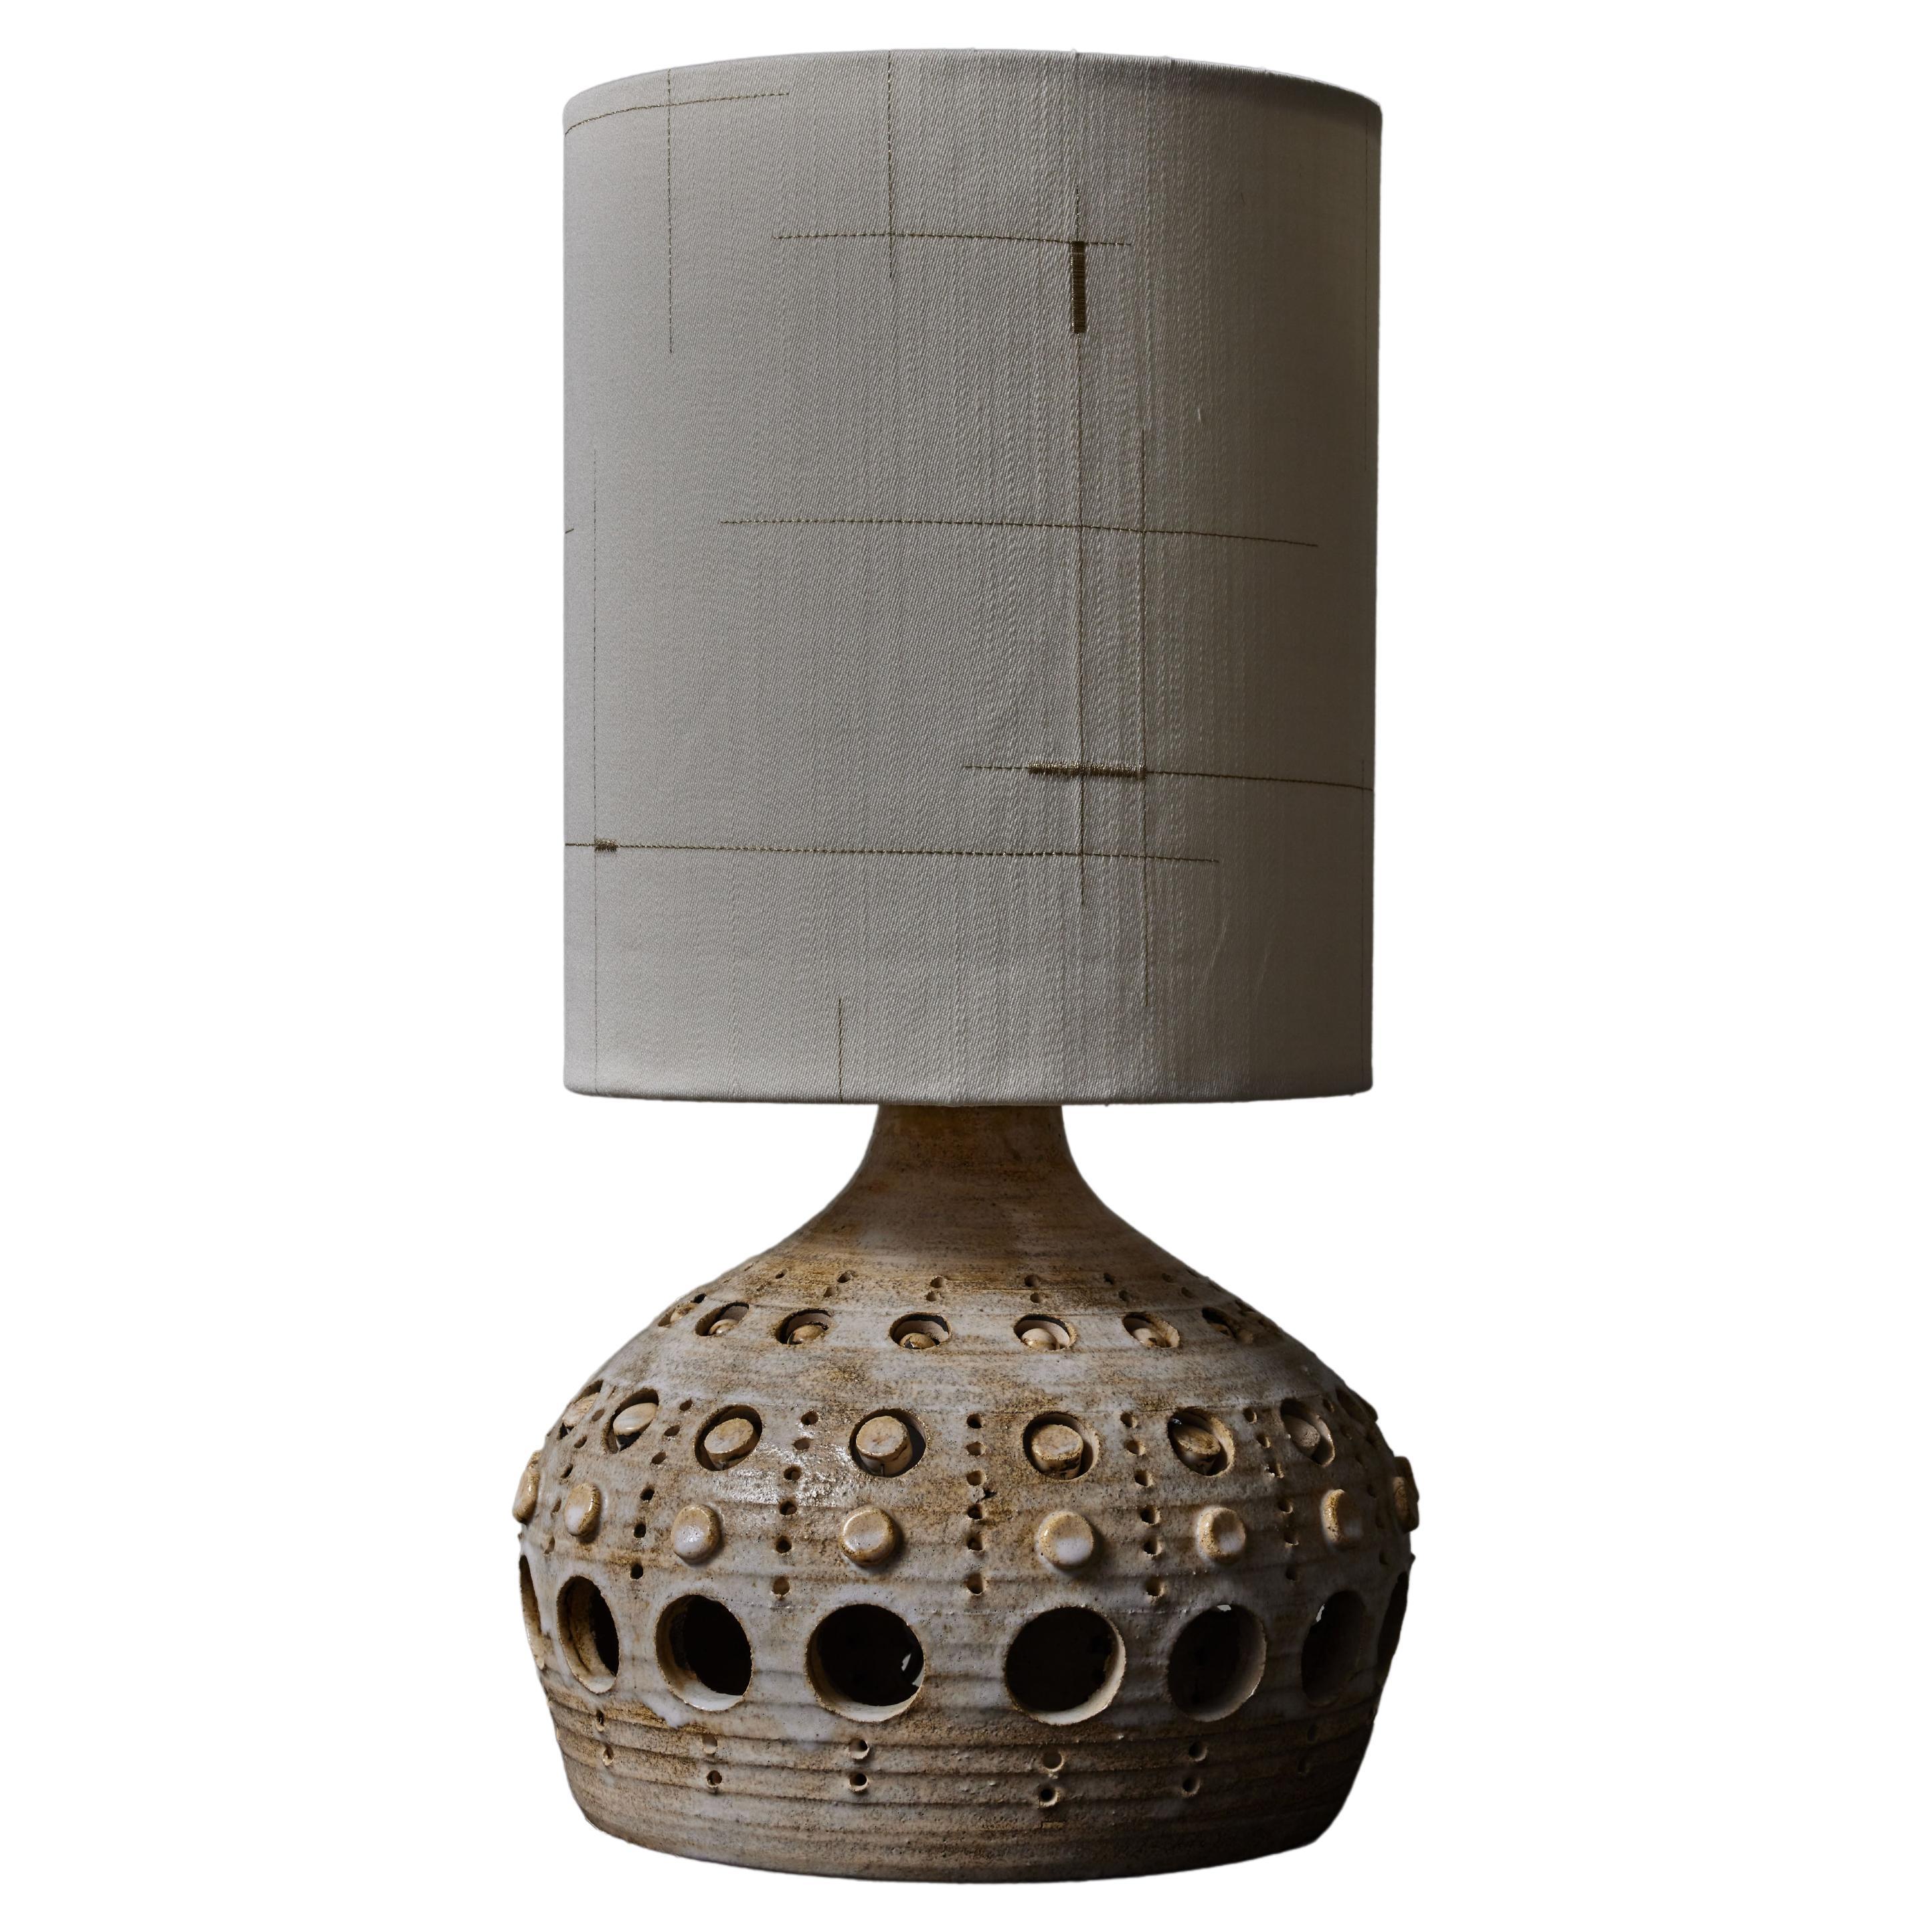 Georges Pelletier Ceramic Table Lamp with Dedar Fabric Shade